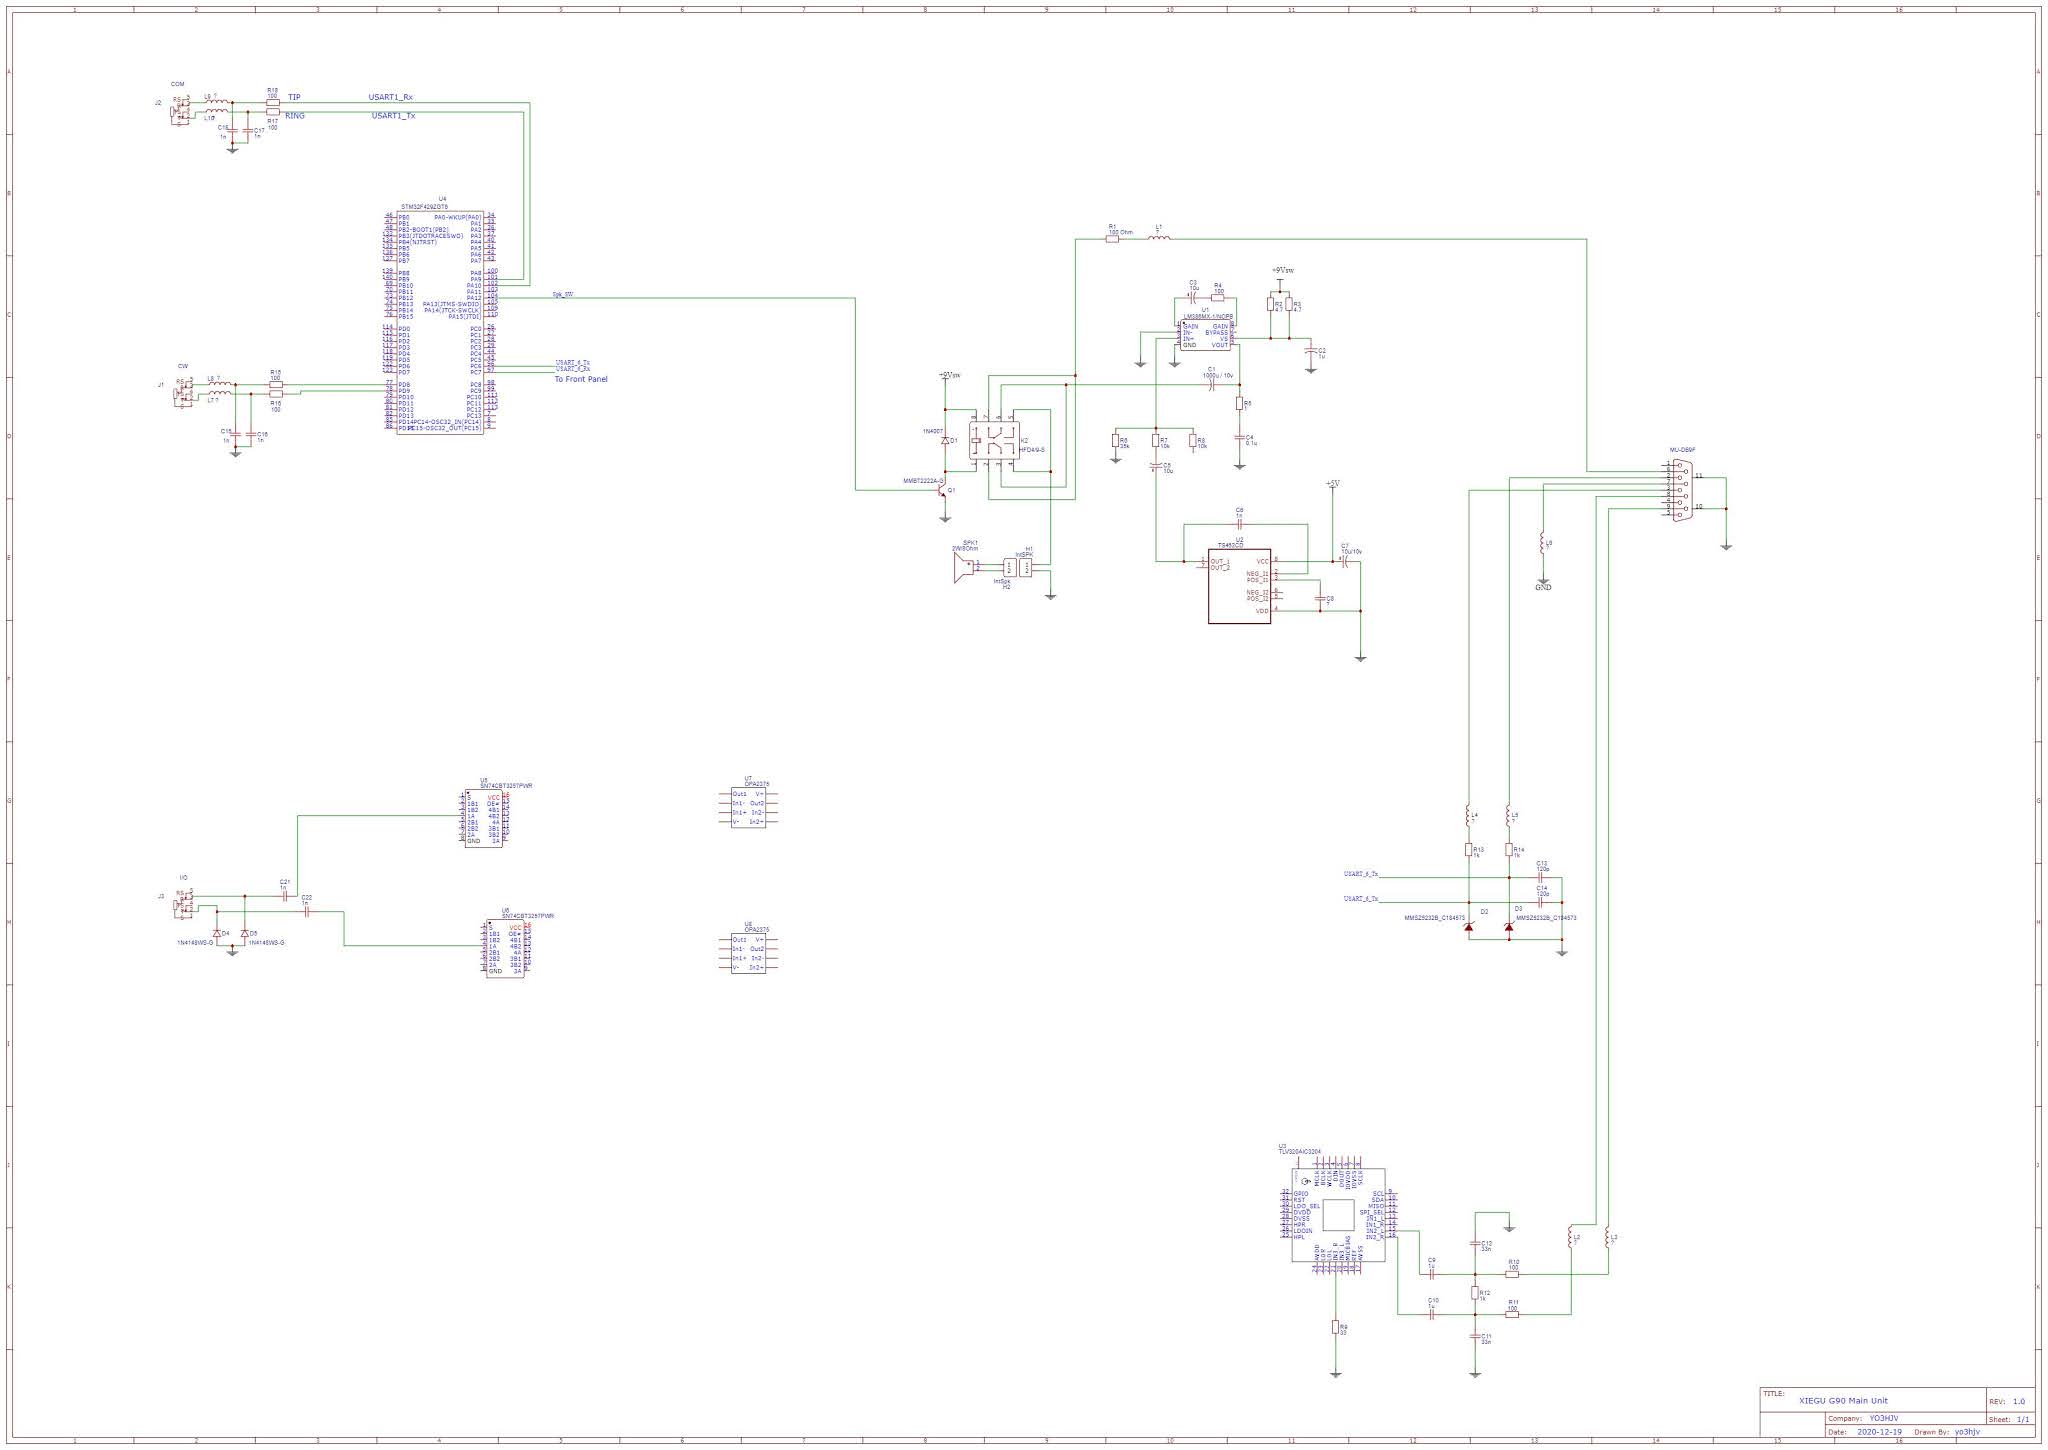 YO3HJV: Xiegu G90 Block Diagram and Schematic